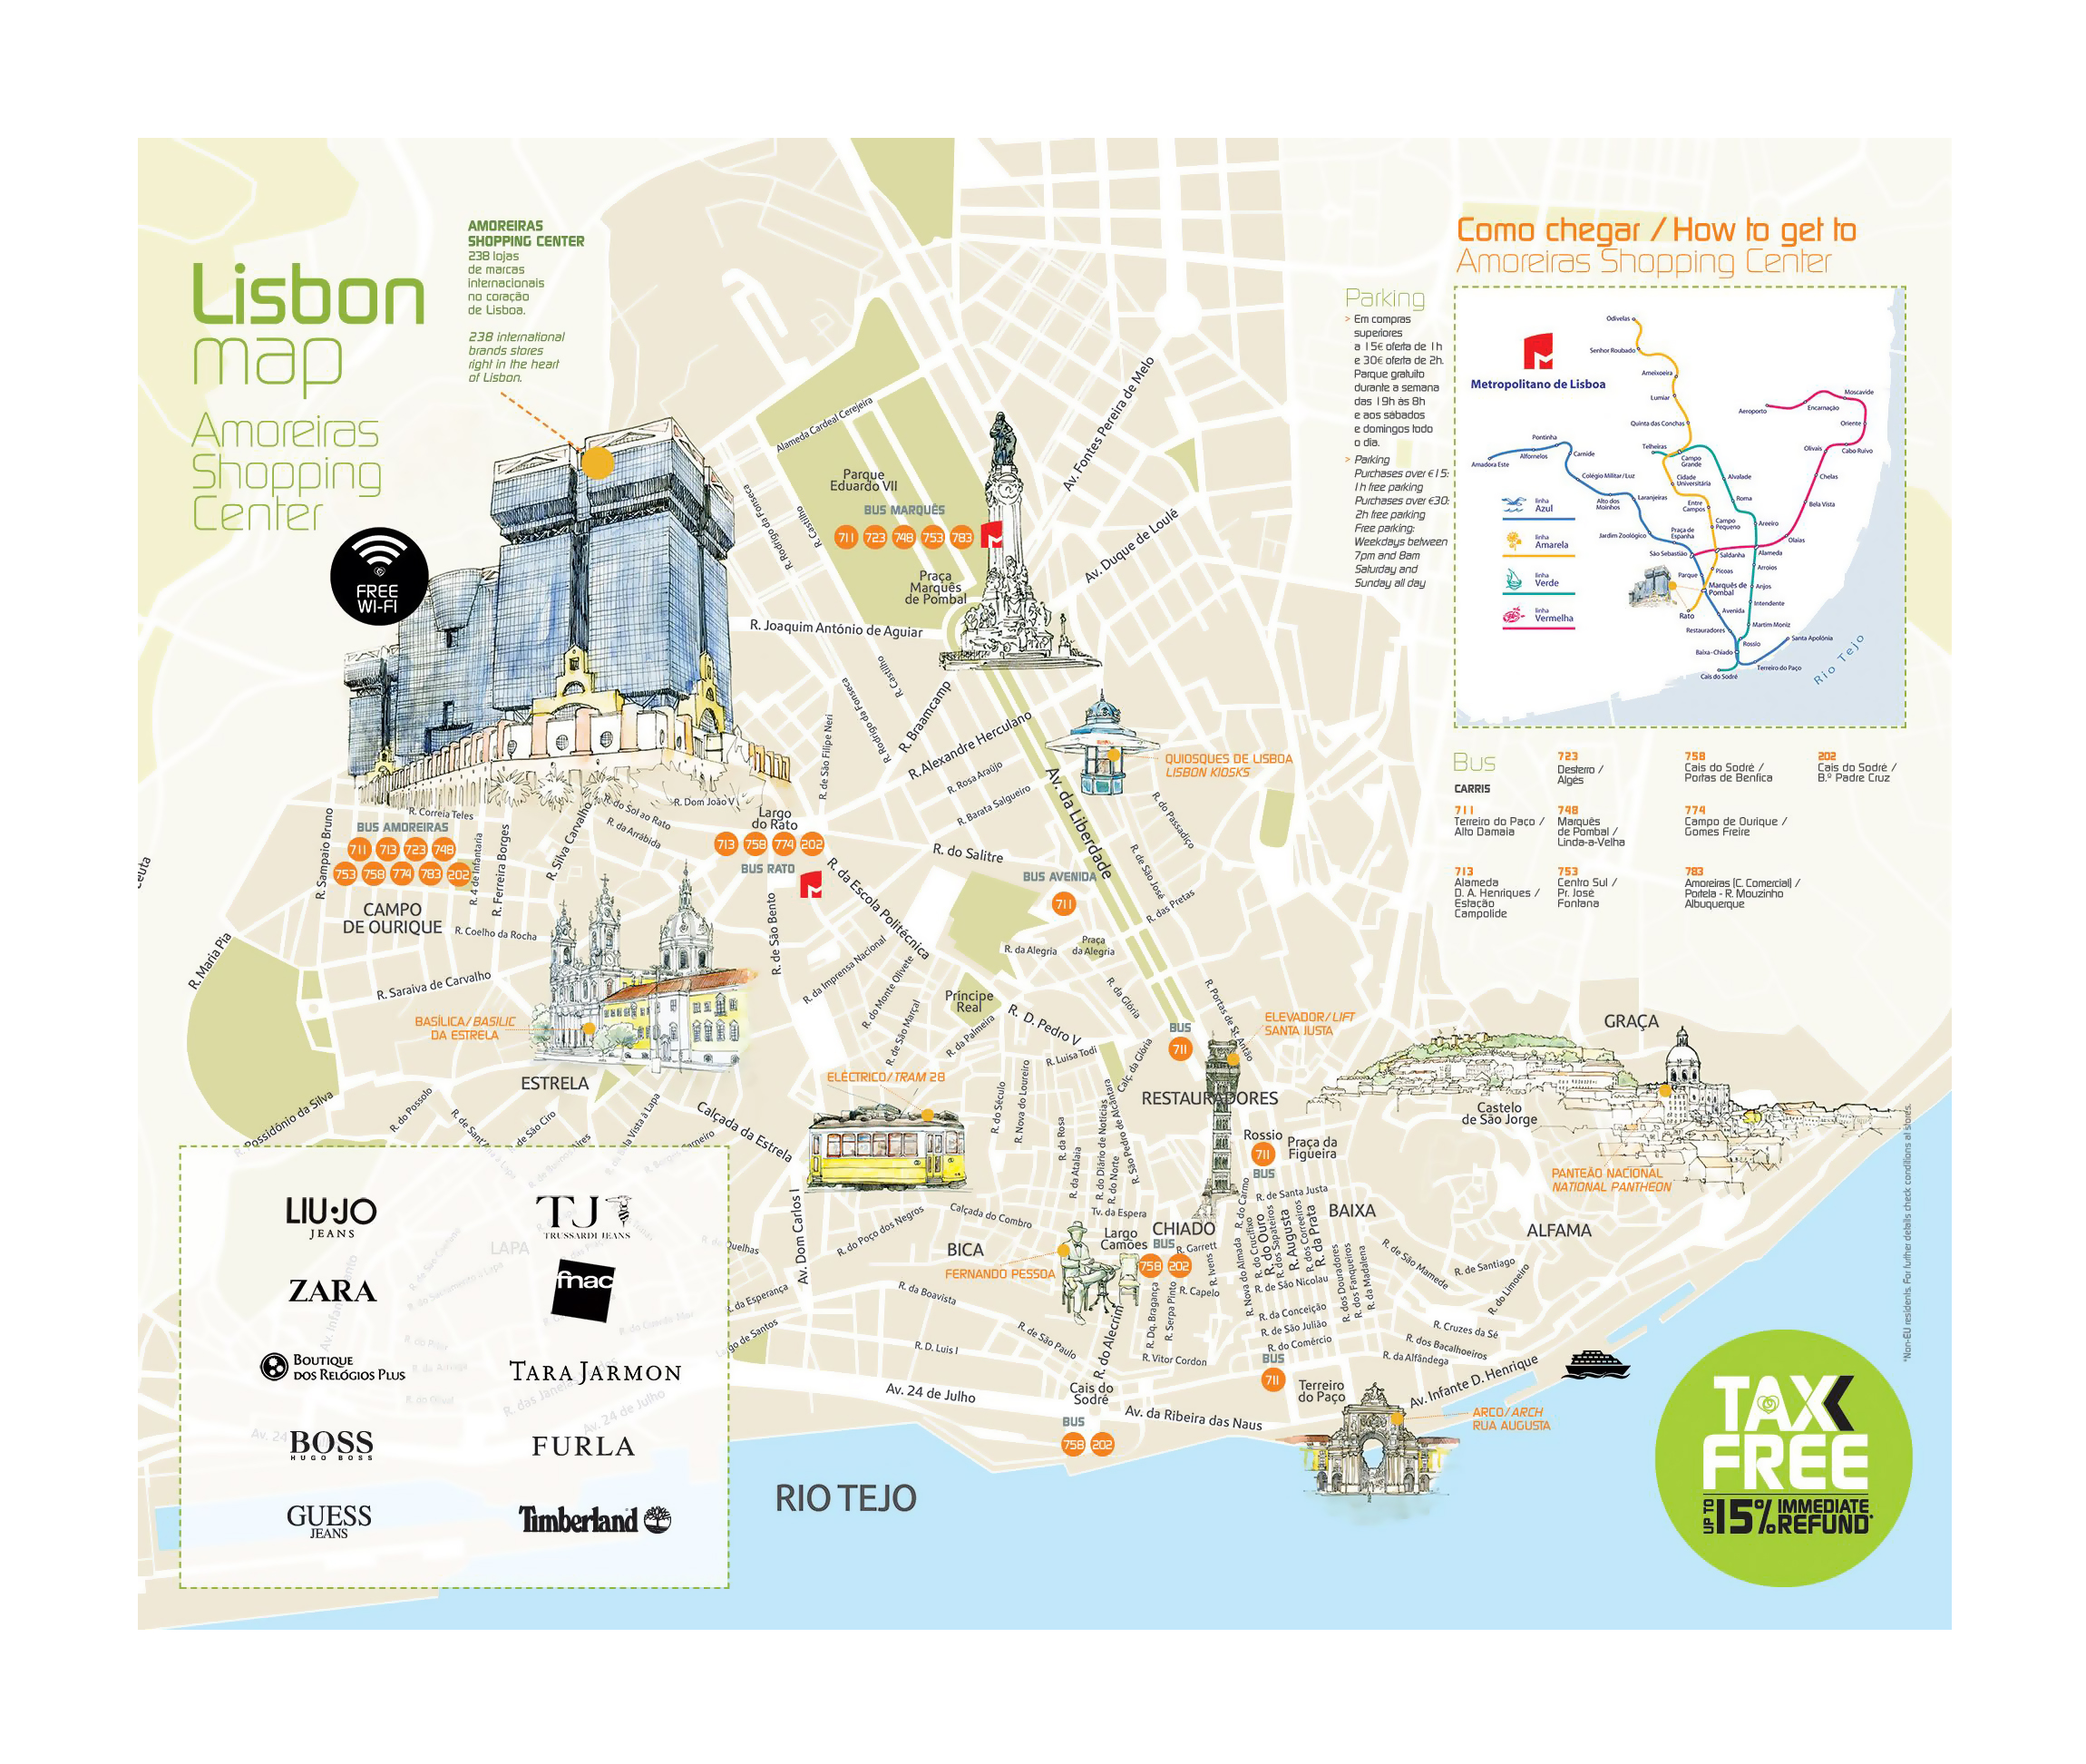 lisbon portugal tourist info